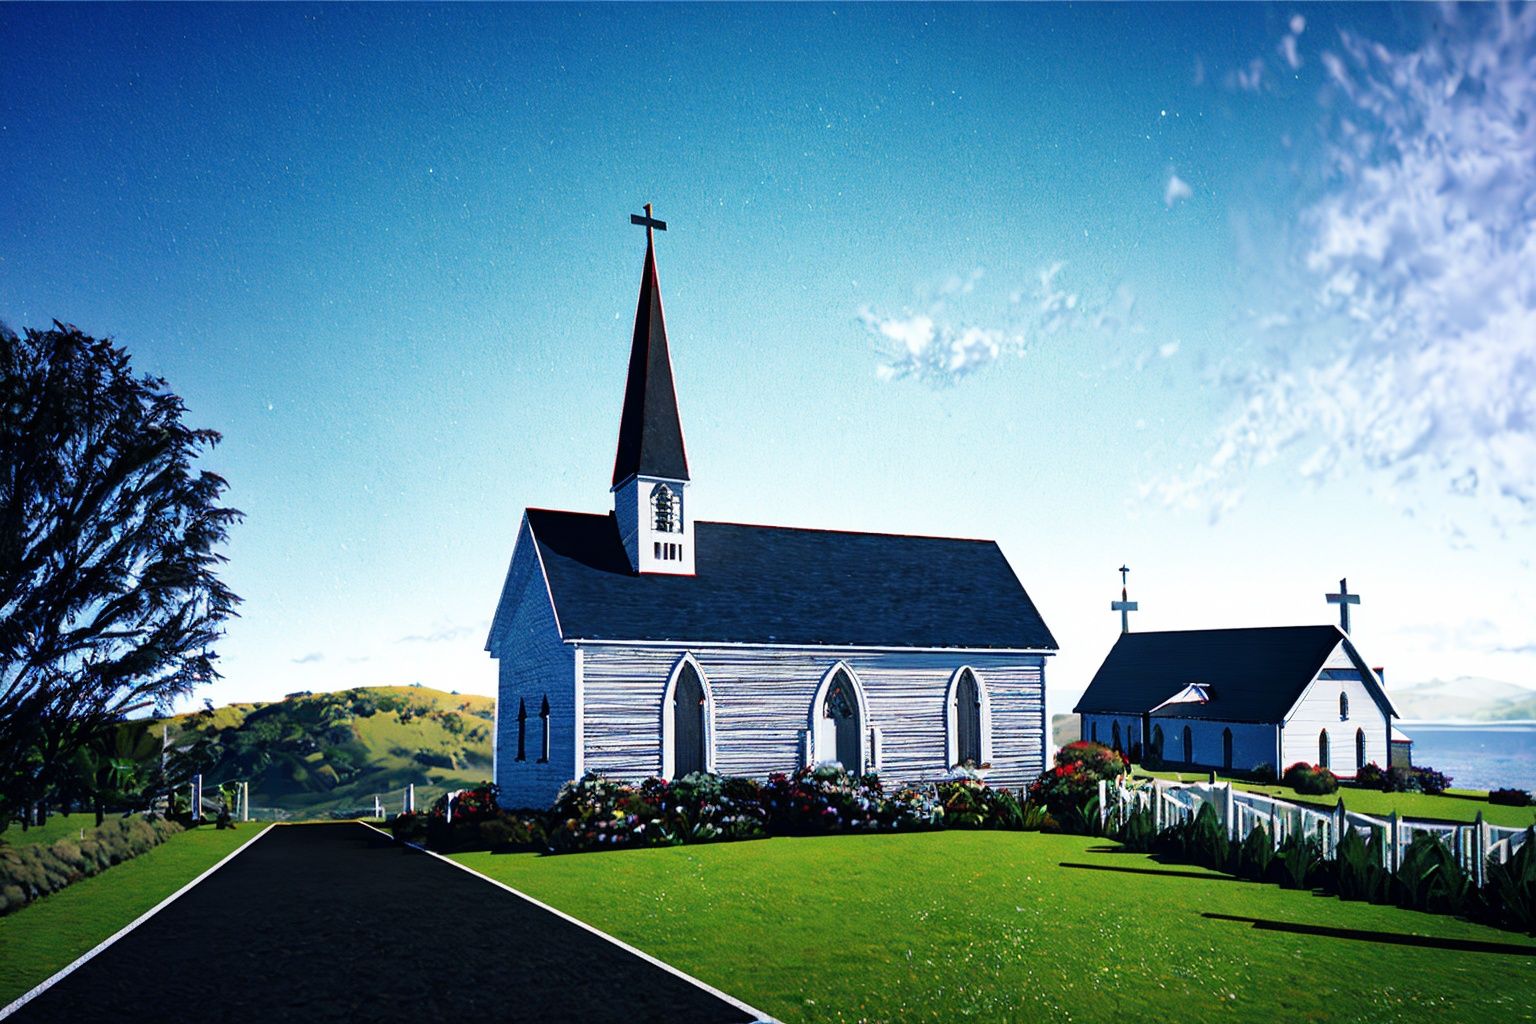 Stewart Island housing and church in New Zealand, 128k, DSLR, Kodak, octane render, masterpiece, best photography, volumetric lighting, 